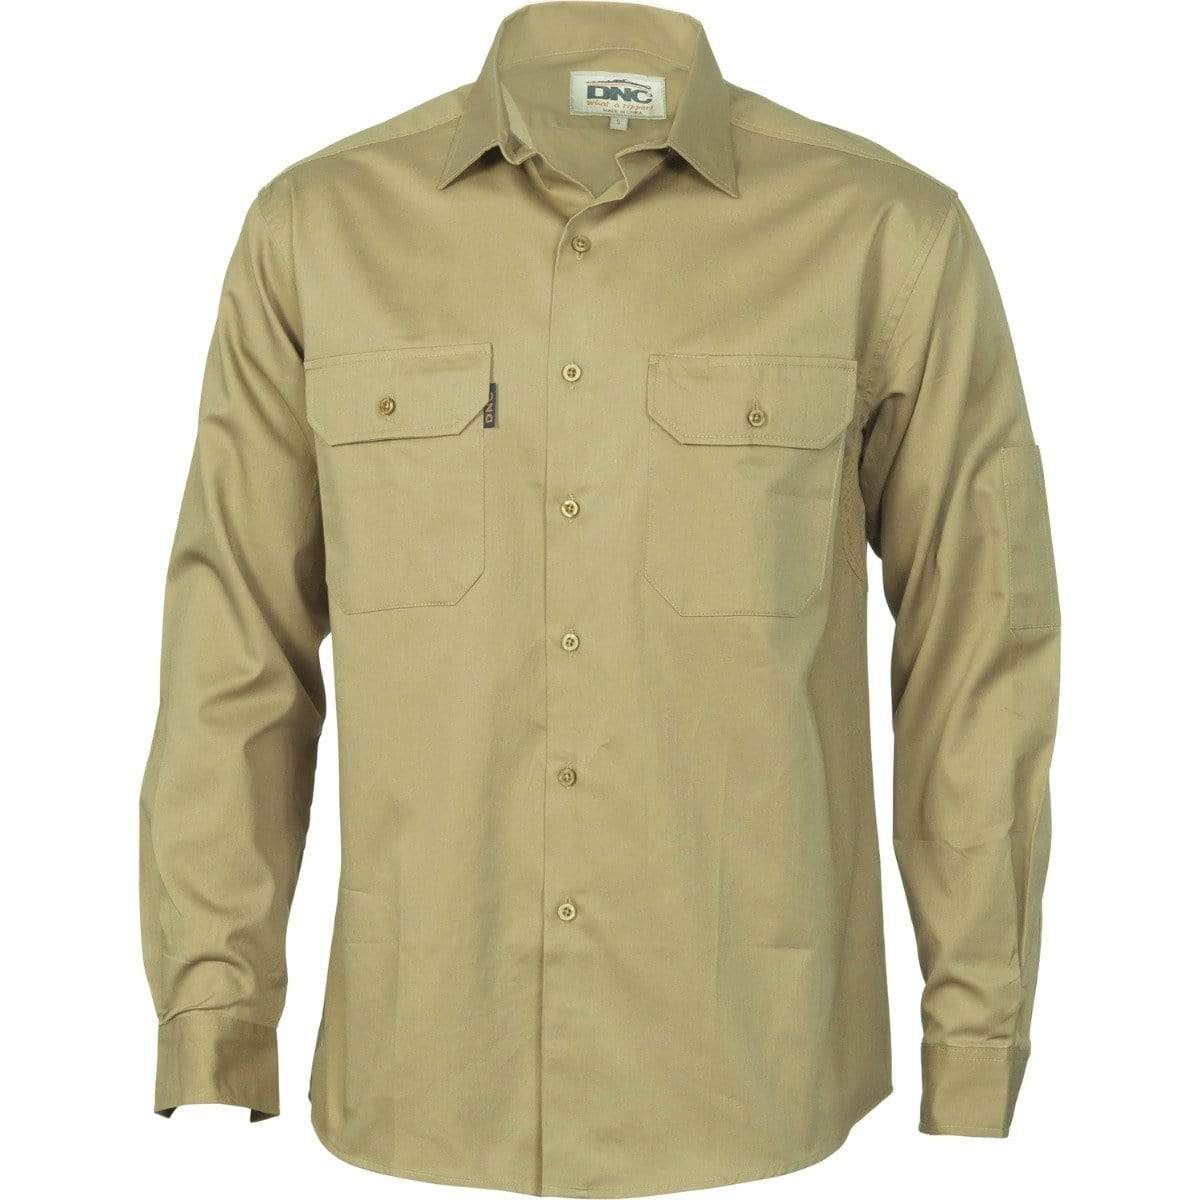 Dnc Workwear Cool-breeze Cotton Long Sleeve Work Shirt - 3208 Work Wear DNC Workwear Khaki S 